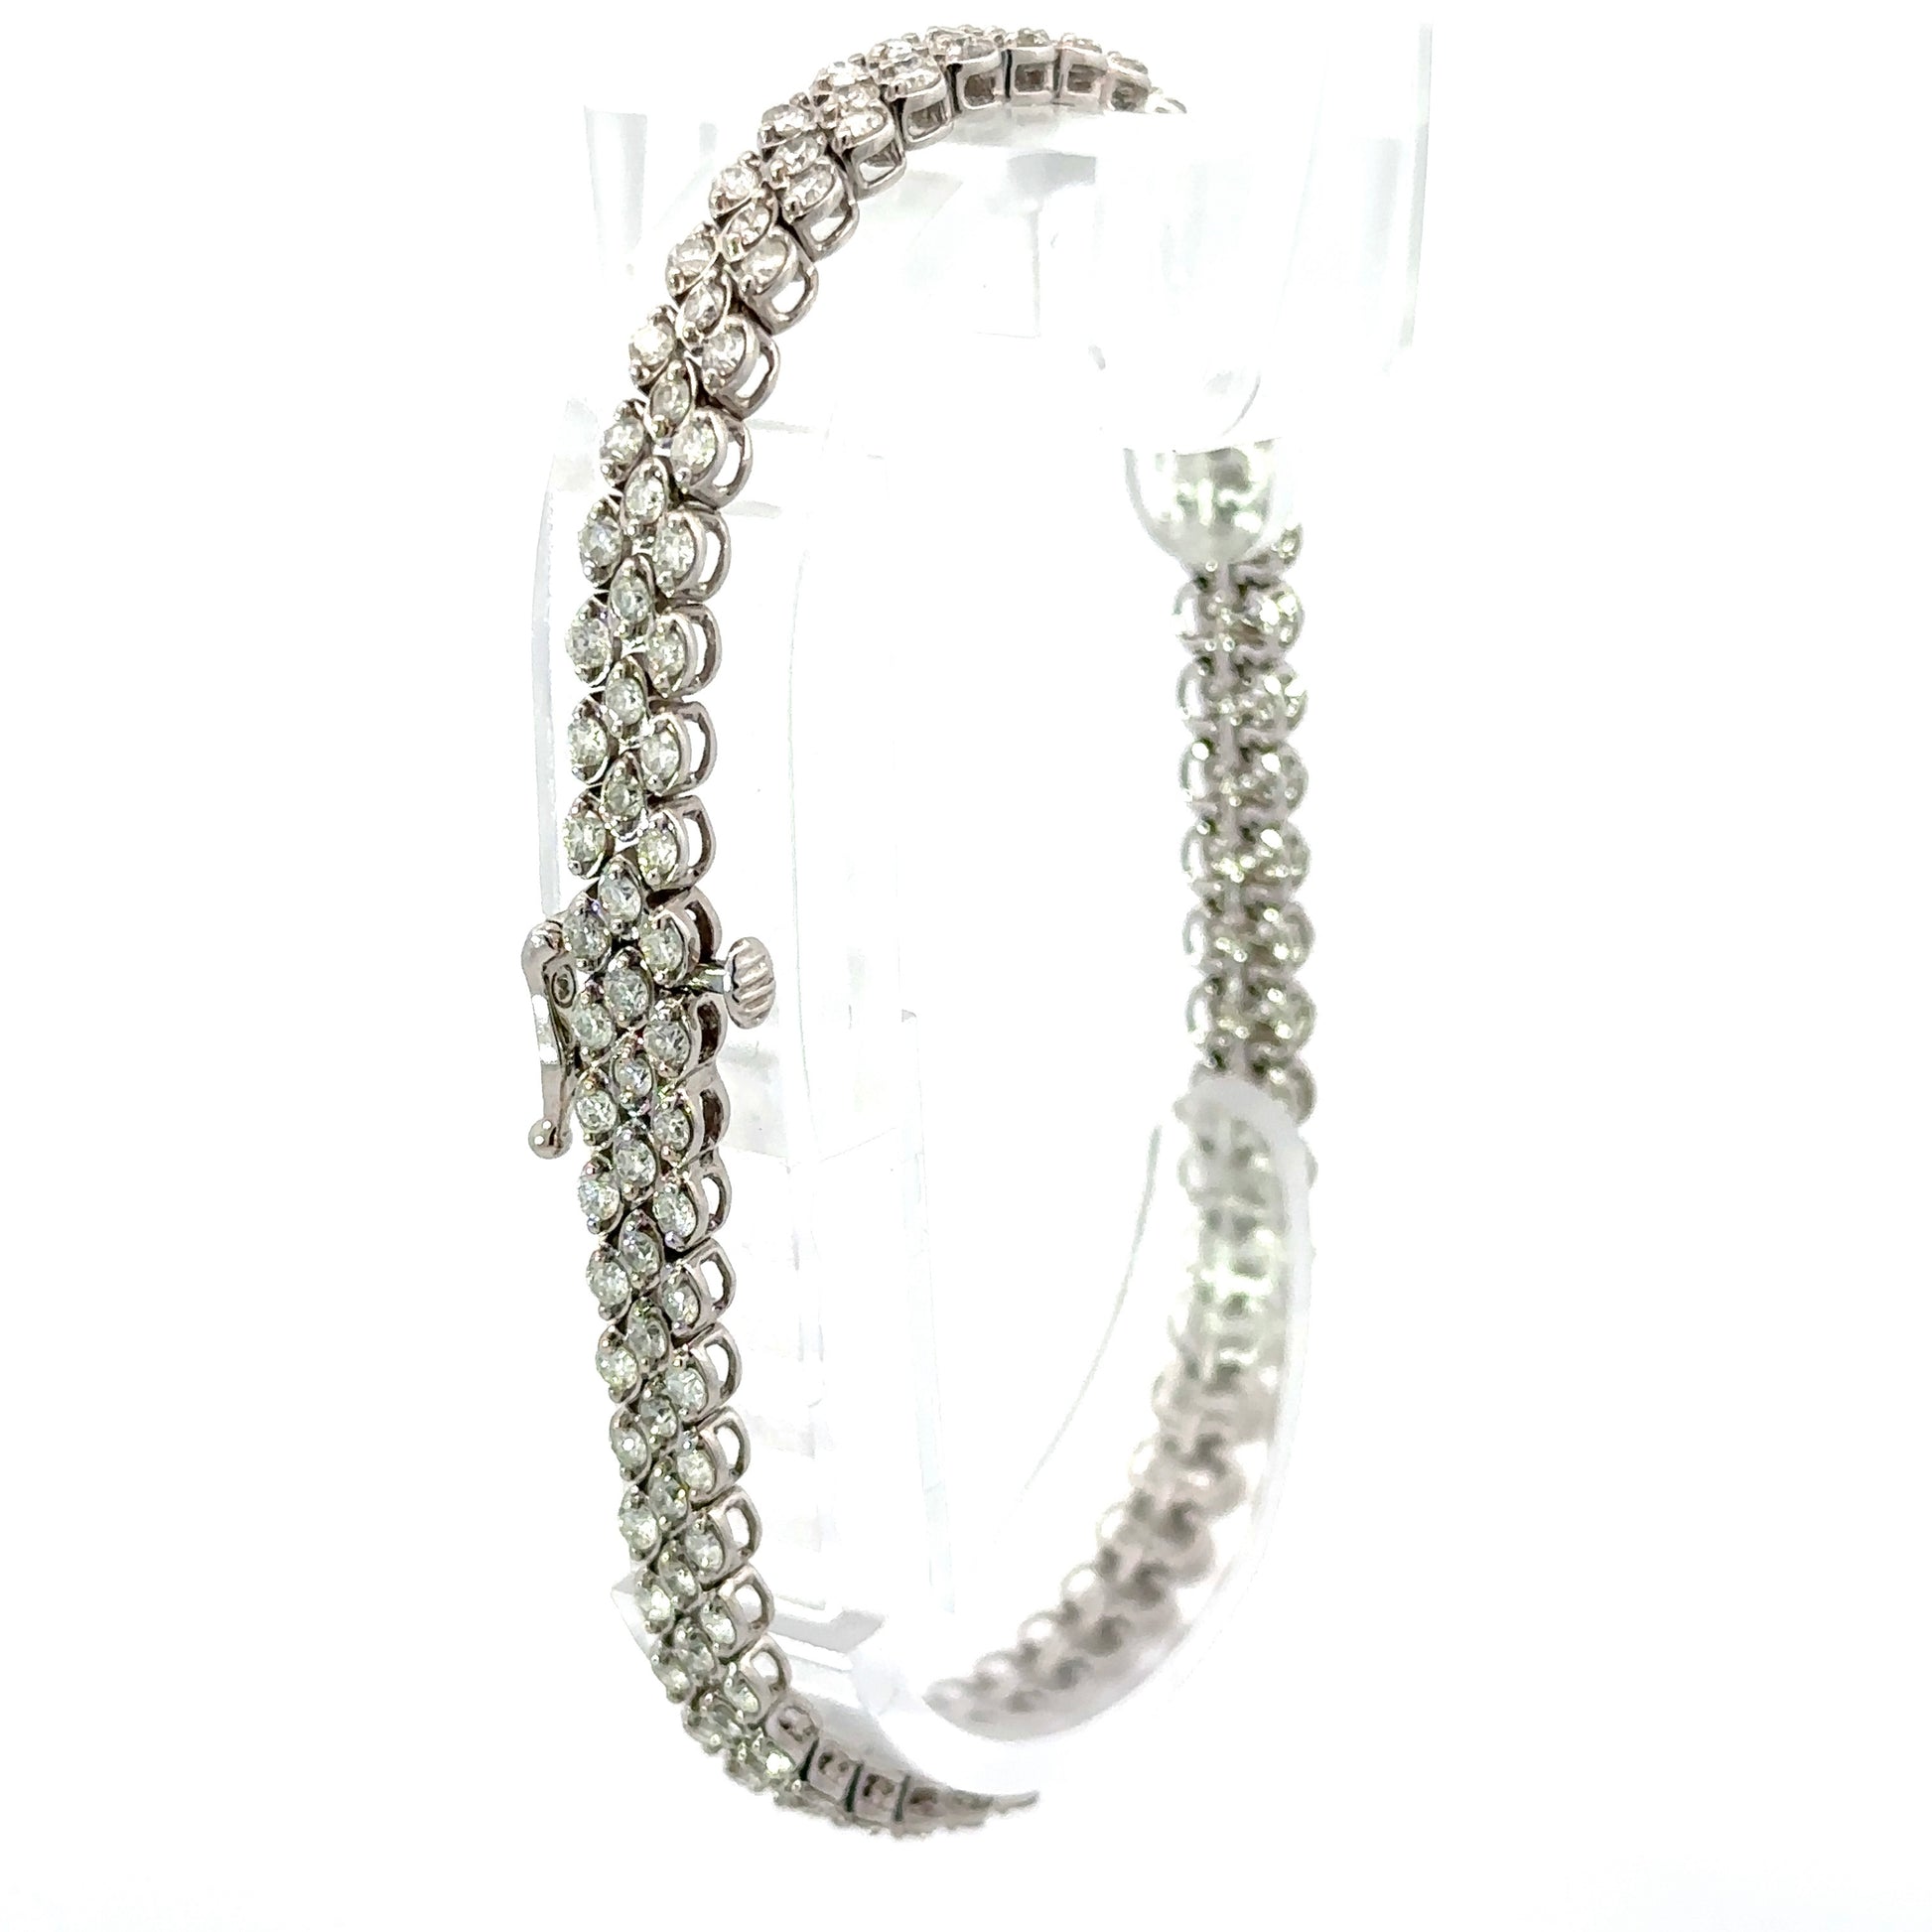 Diagonal view of back of diamond bracelet